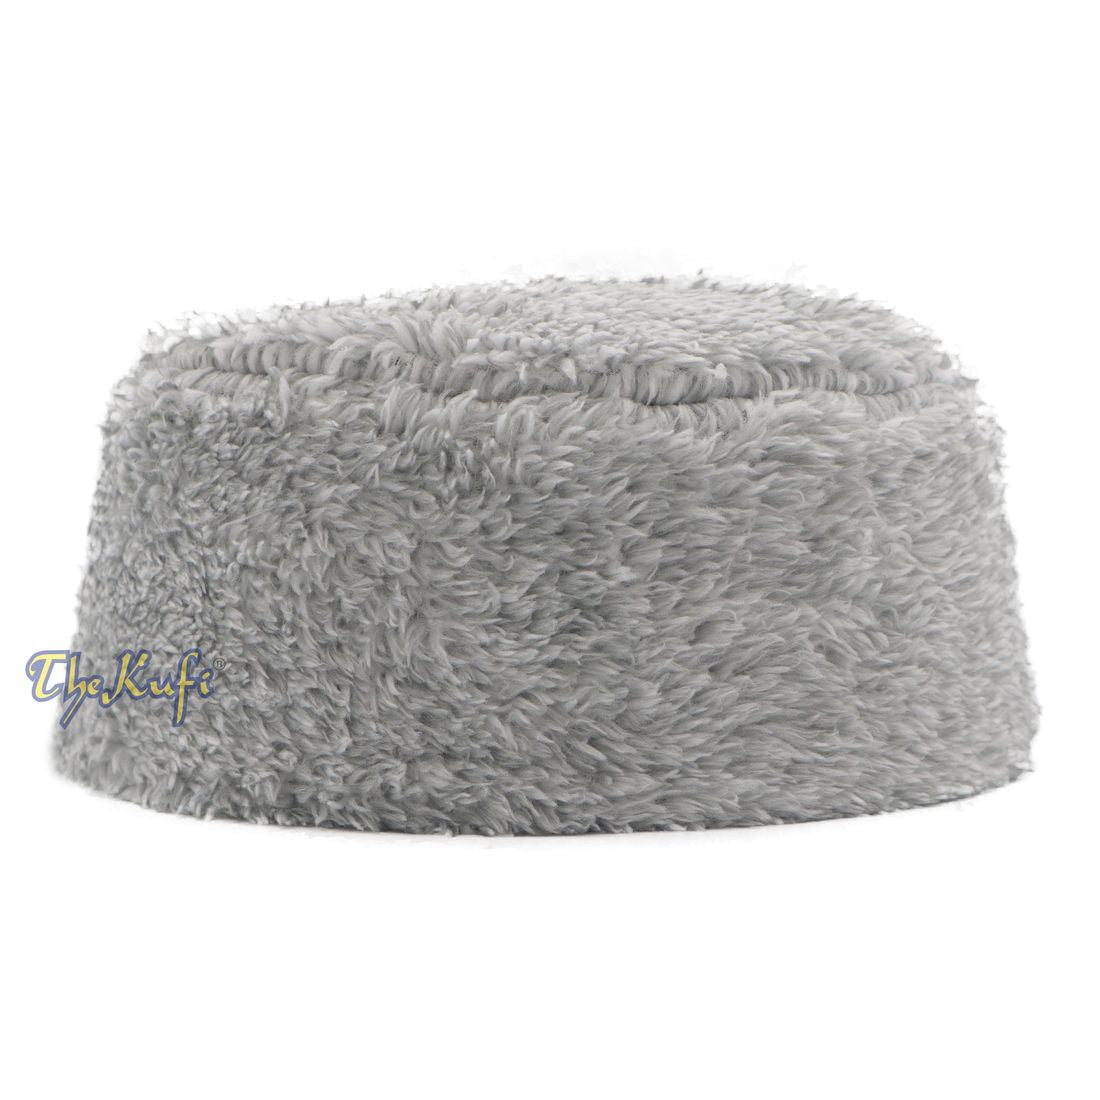 Faded Grey Winter Kufi Faux Fur Warm Chechen Uzbeki Style Islamic Hat Plush One-size Medium-large Stretchy 4-inch Tall Head Cover Muslim